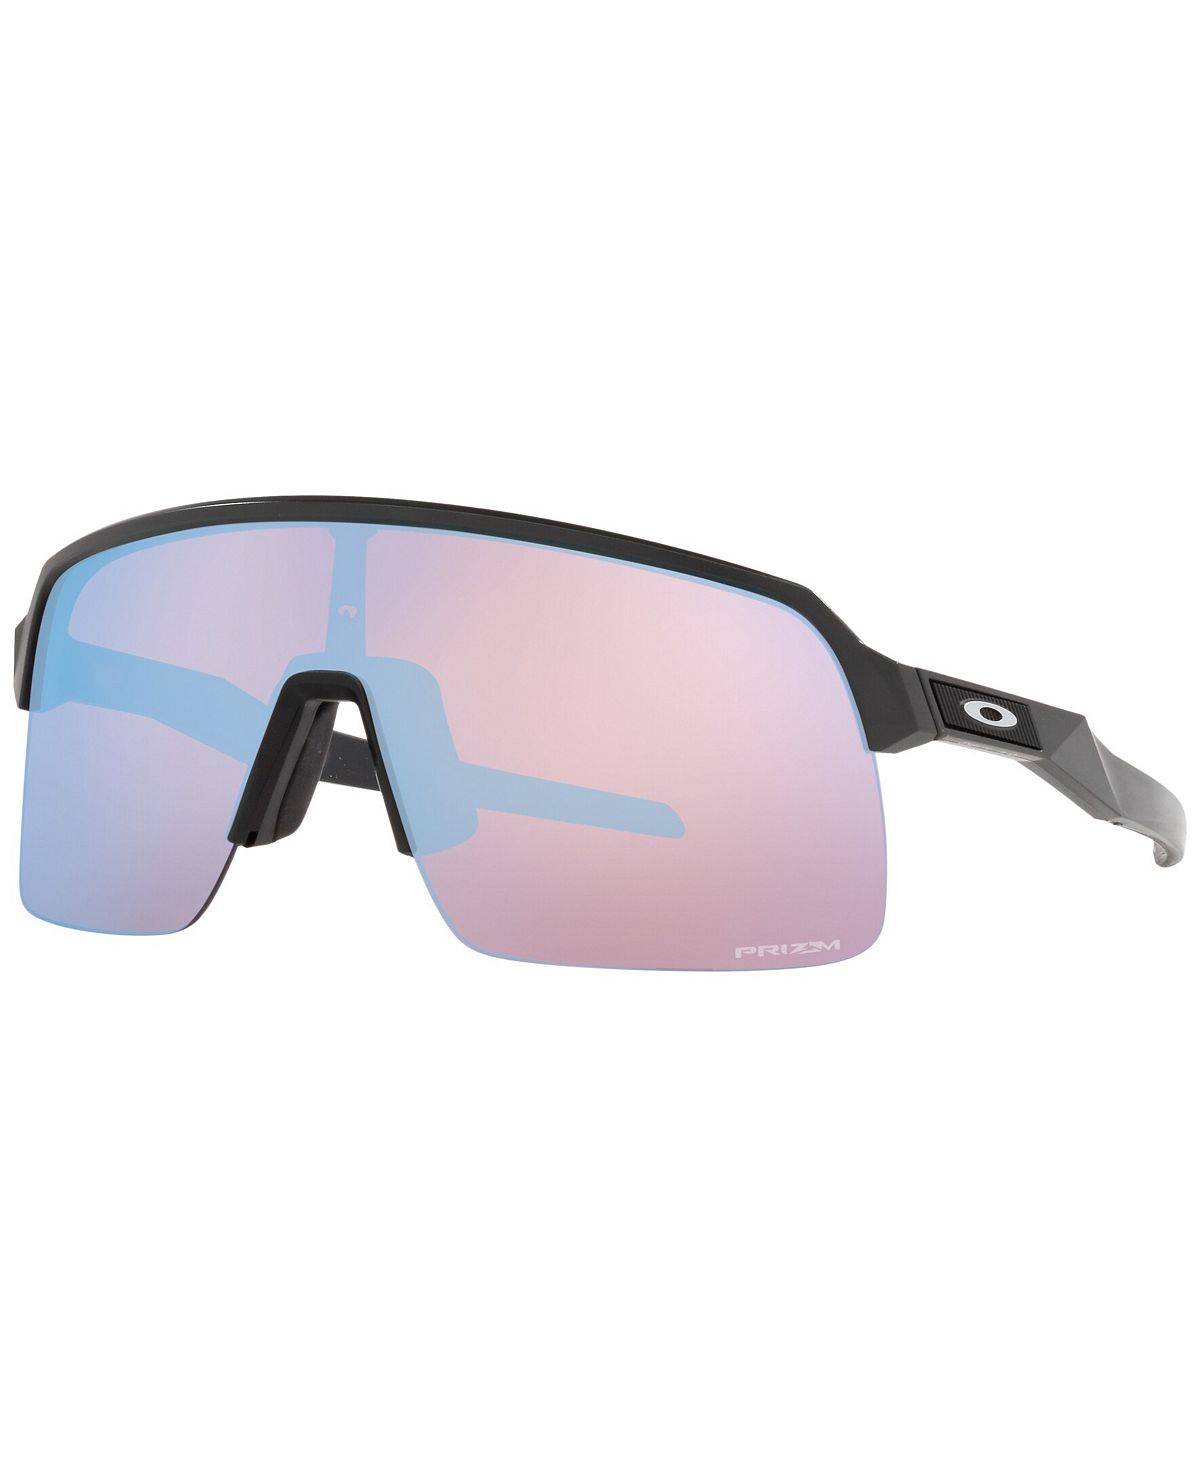 Мужские солнцезащитные очки, OO9463 Sutro Lite 39 Oakley topface skin editor matte carbon black dipliner